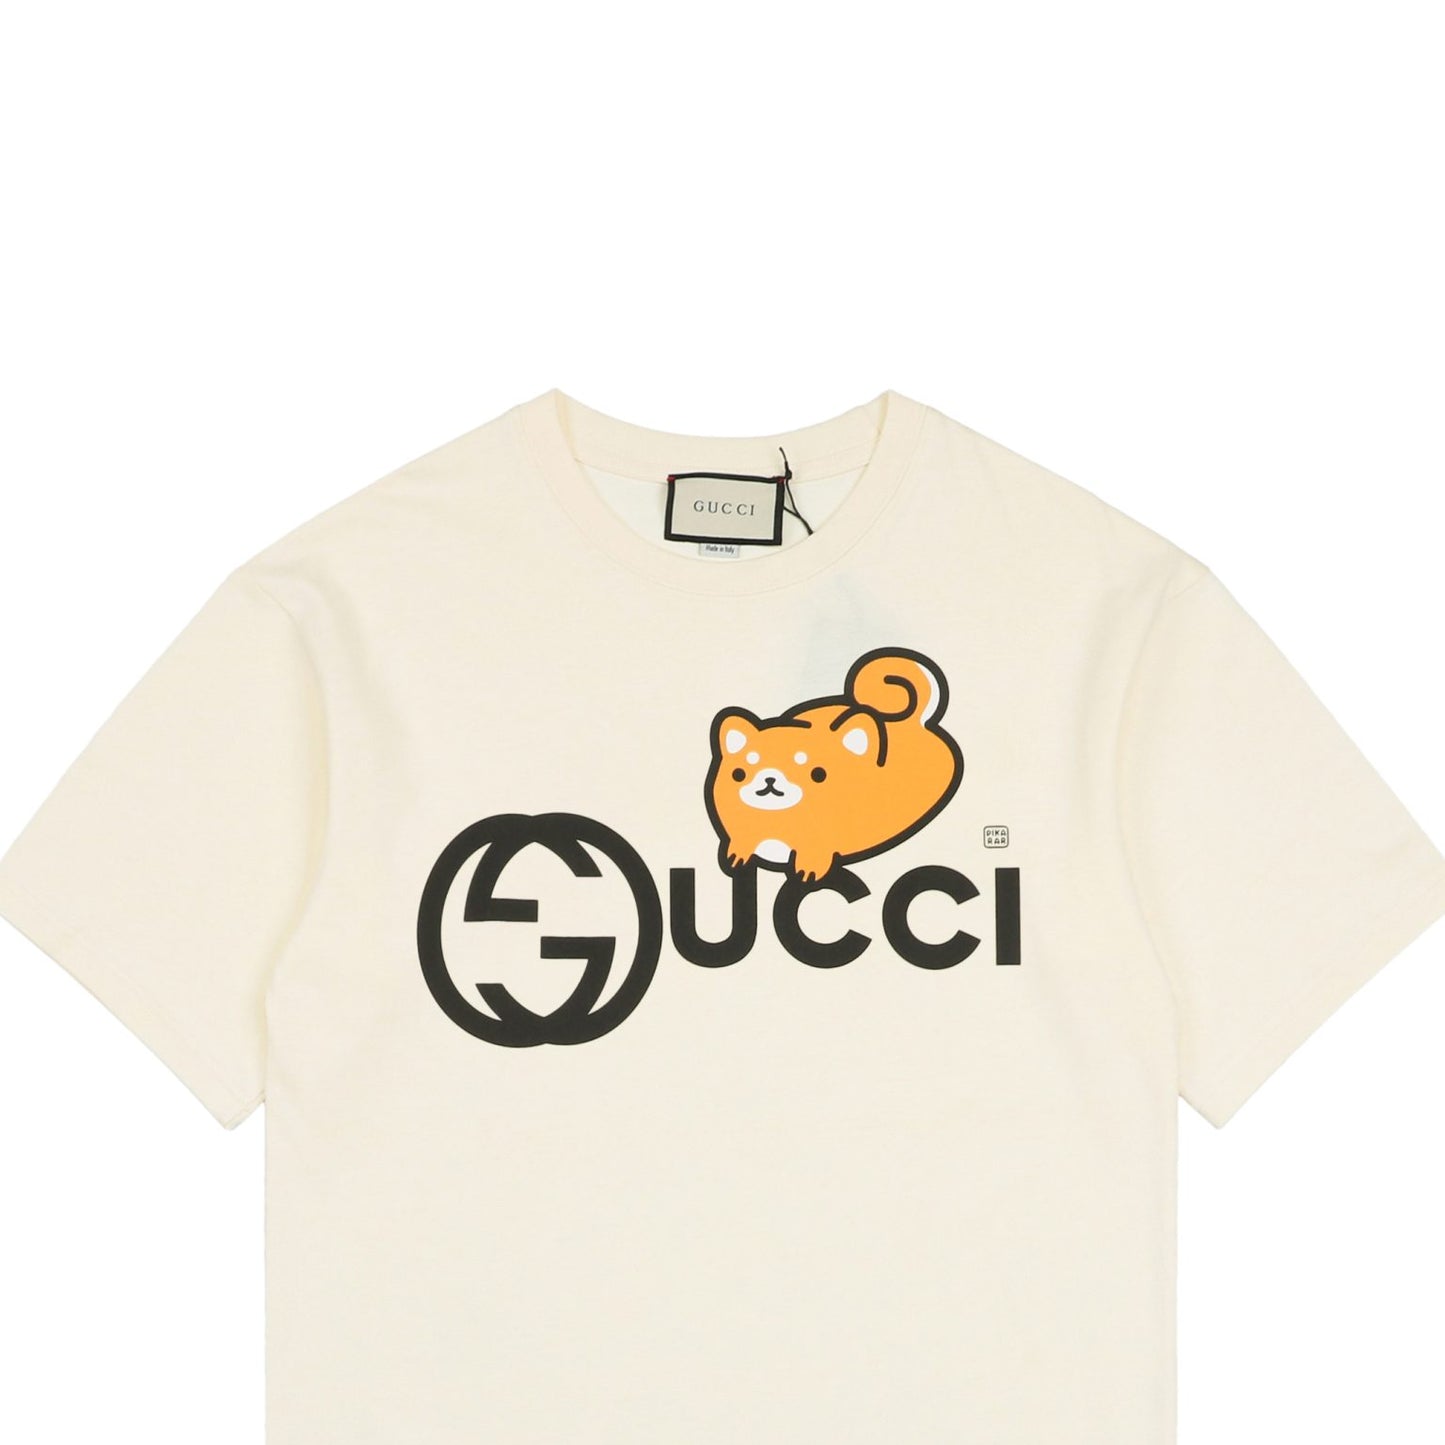 Gucc1 Animal Print Cotton T-Shirt